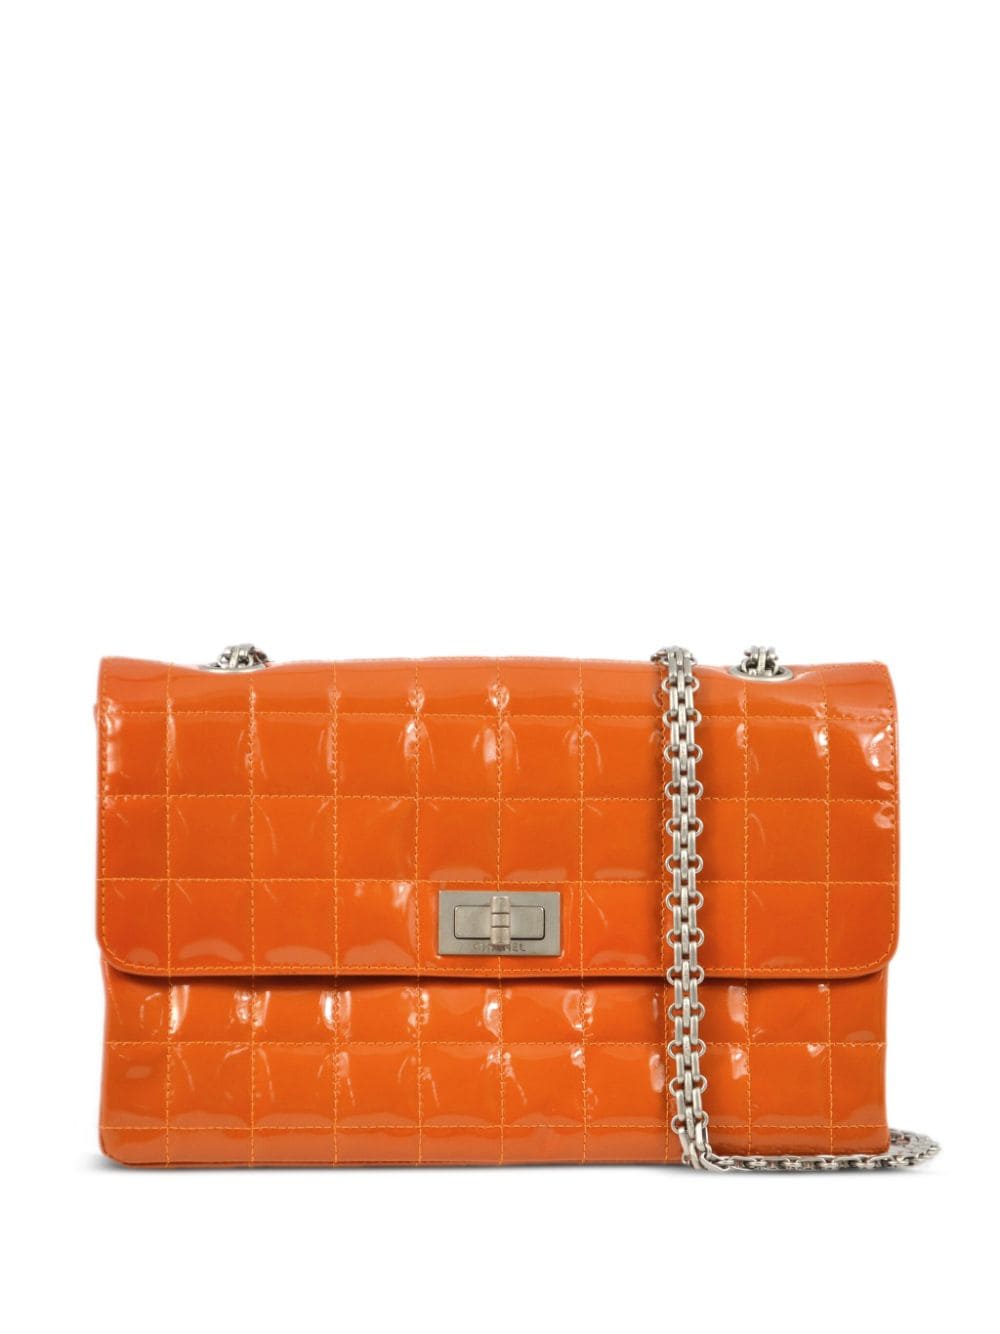 Pre-owned Chanel 2000 Mademoiselle Reissue Shoulder Bag In Orange